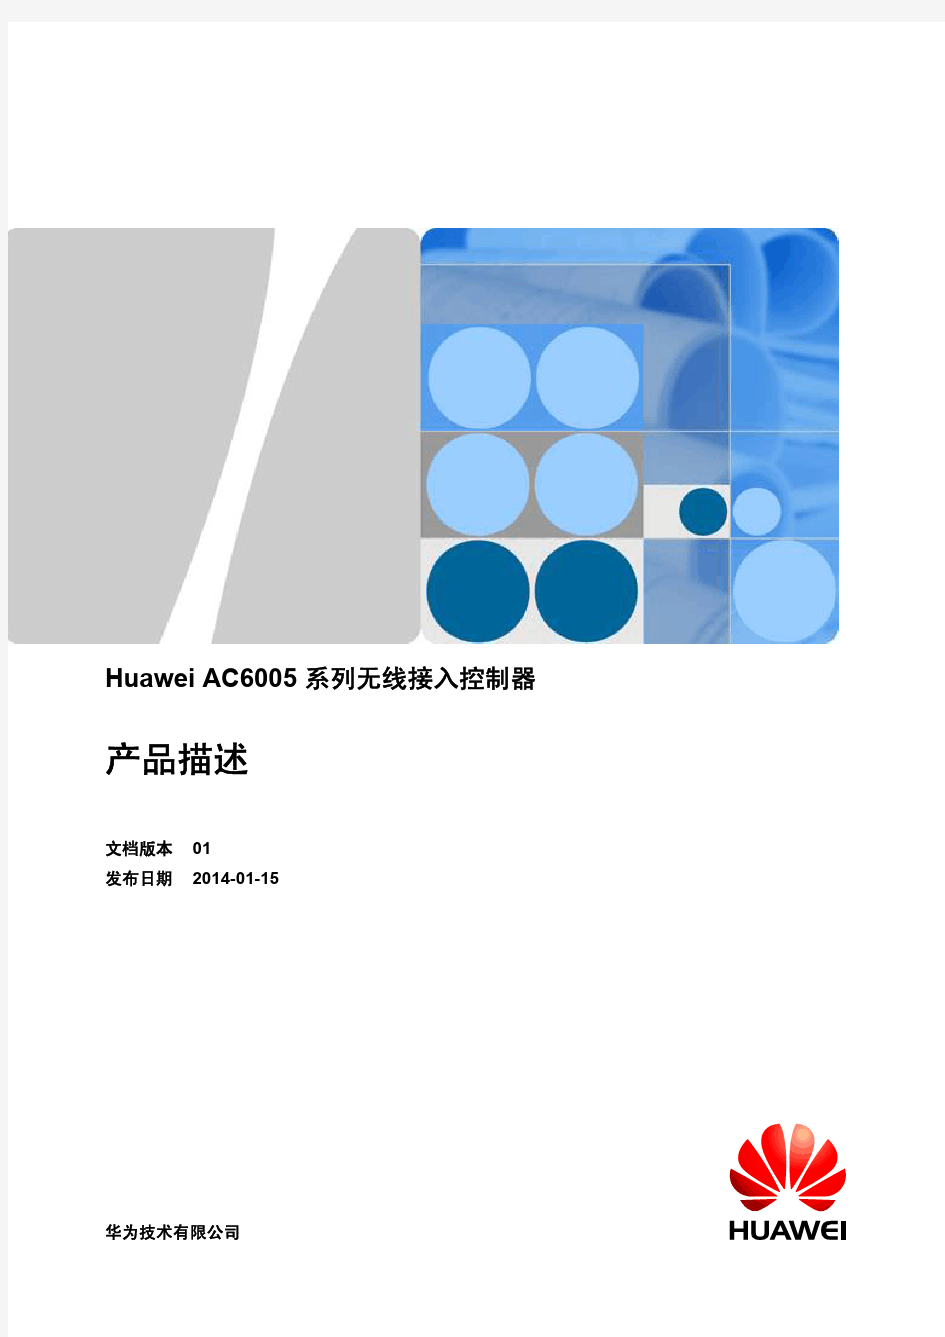 Huawei AC6005 系列无线接入控制器 产品描述 01